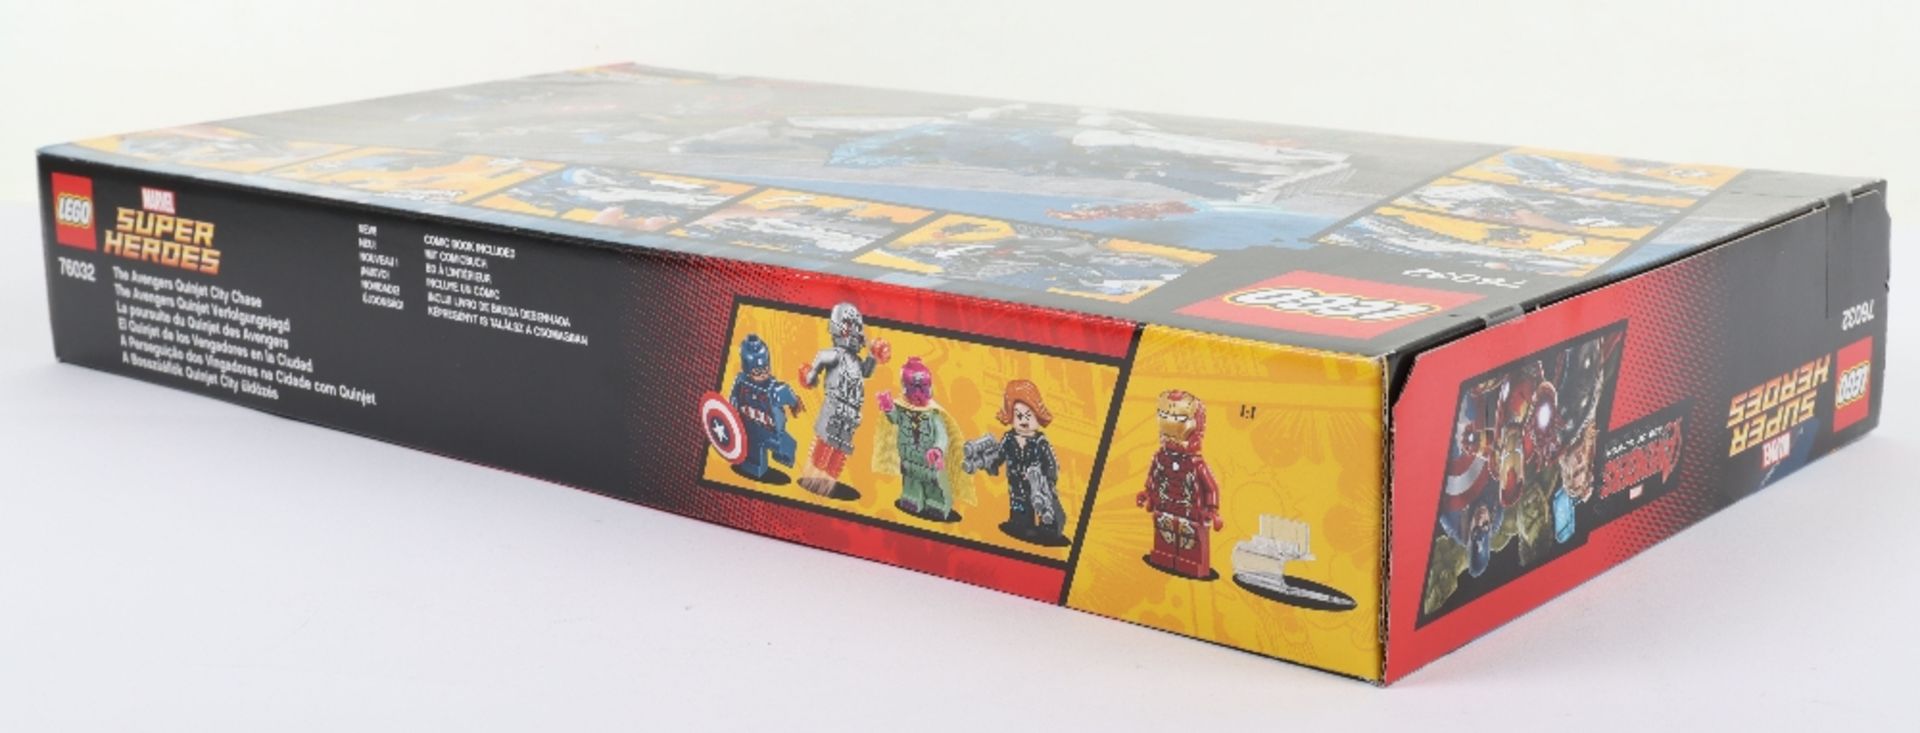 Lego Marvel Superheroes 76032 The Avengers Quinjet city chase sealed boxed - Image 6 of 8